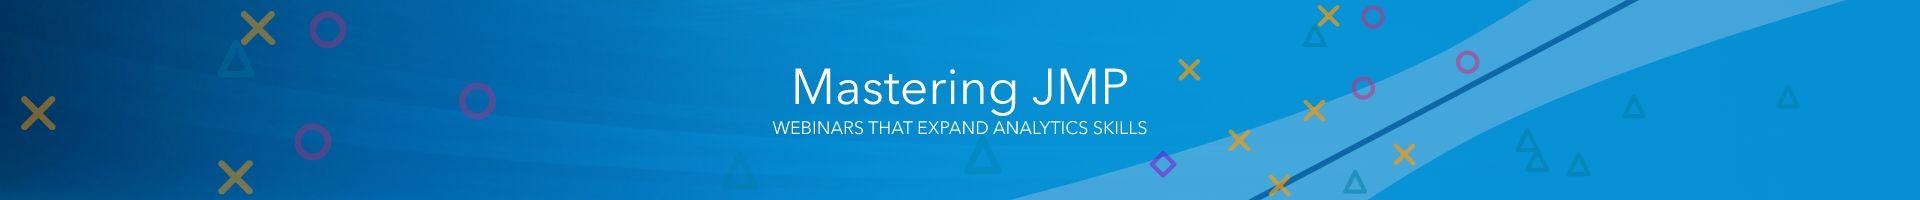 JMP Mastering Community Banner.jpg